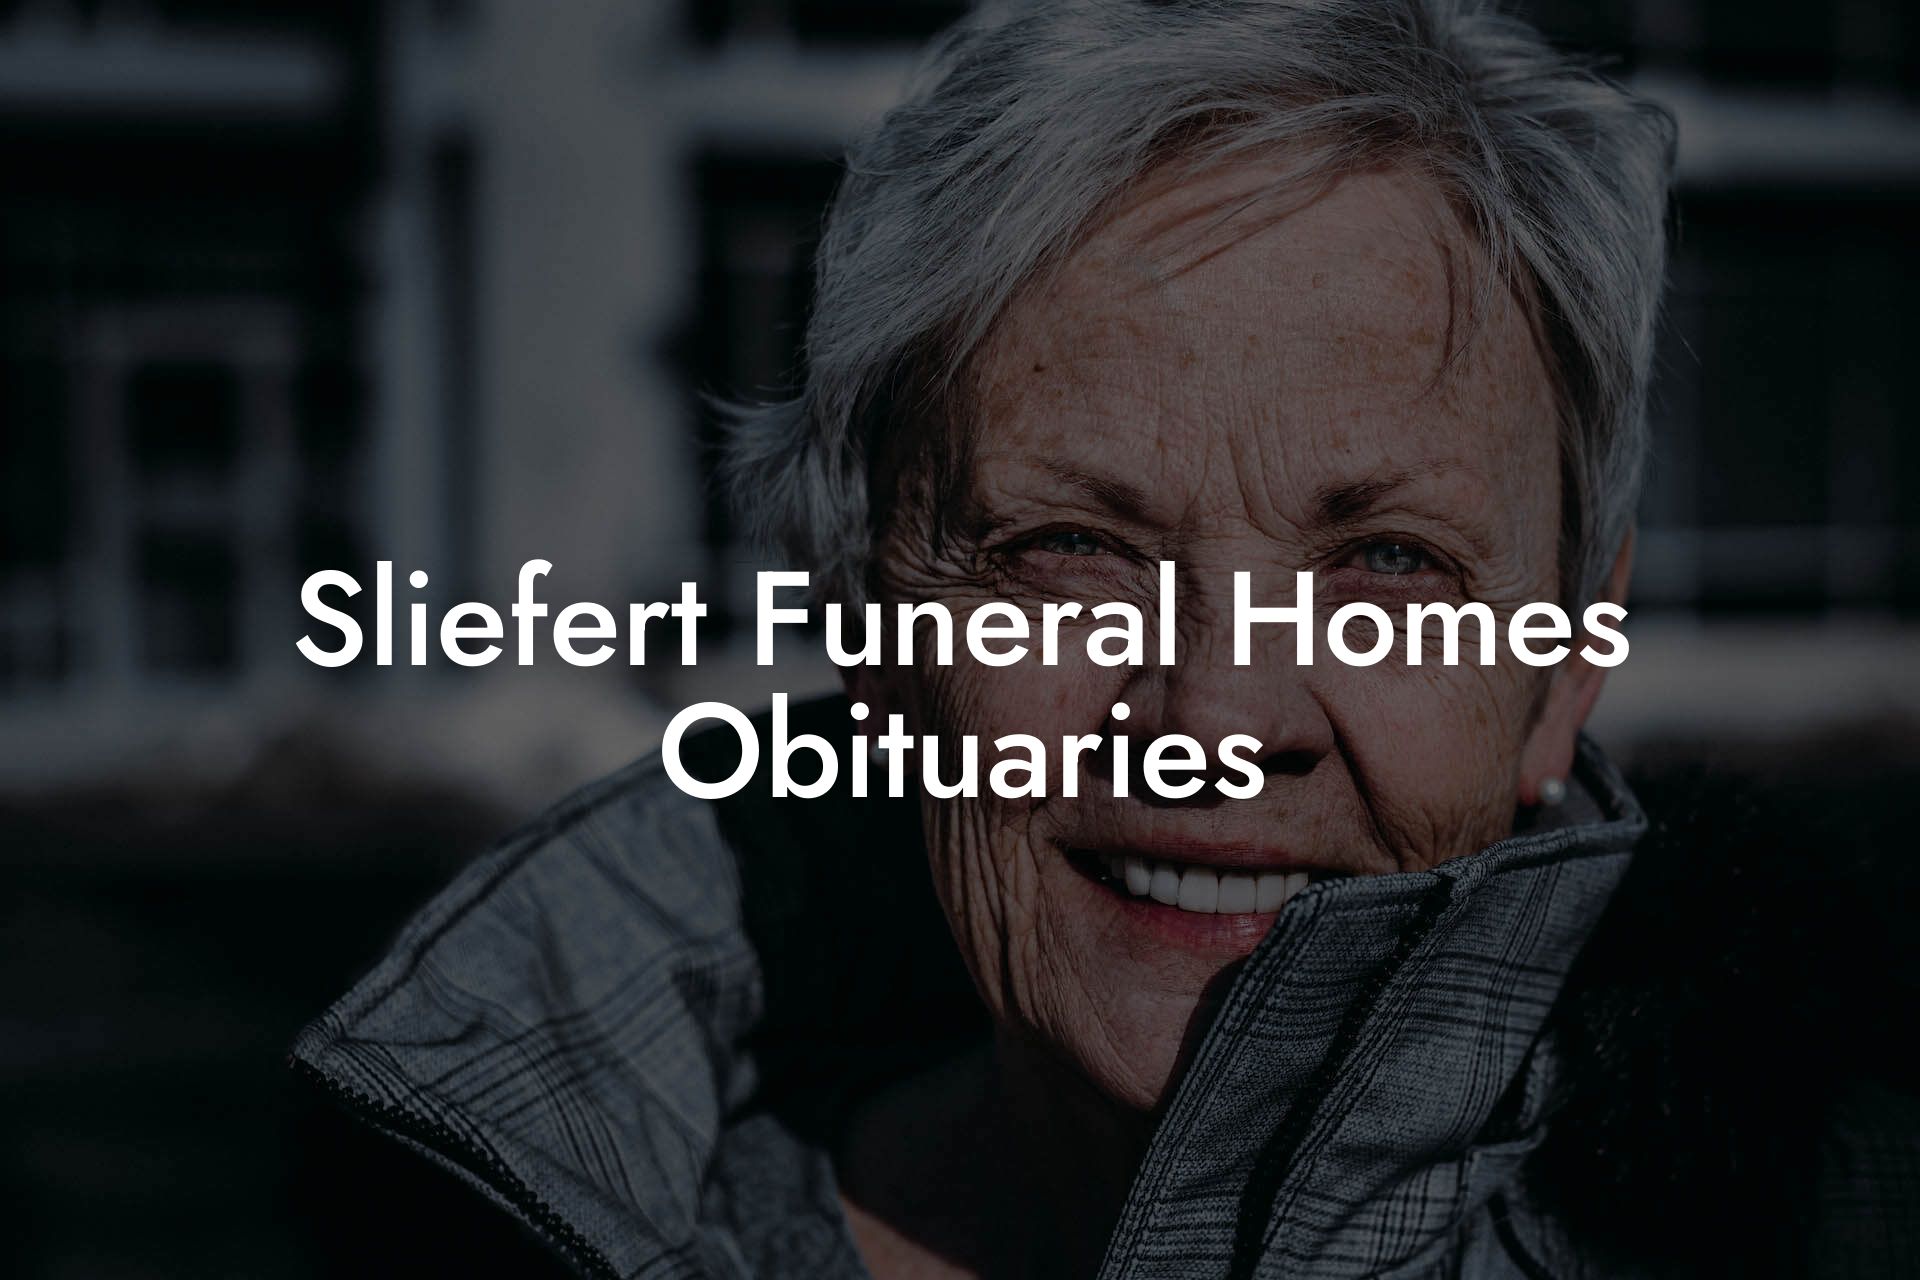 Sliefert Funeral Homes Obituaries